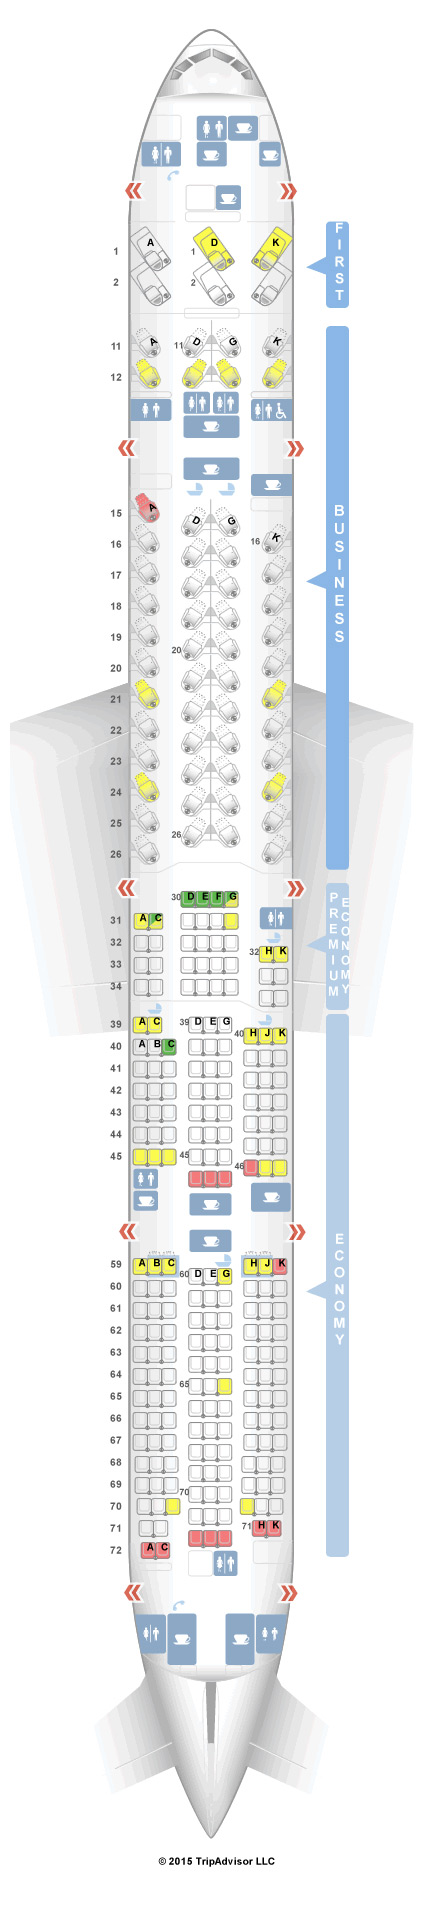 G Dragon Seating Chart